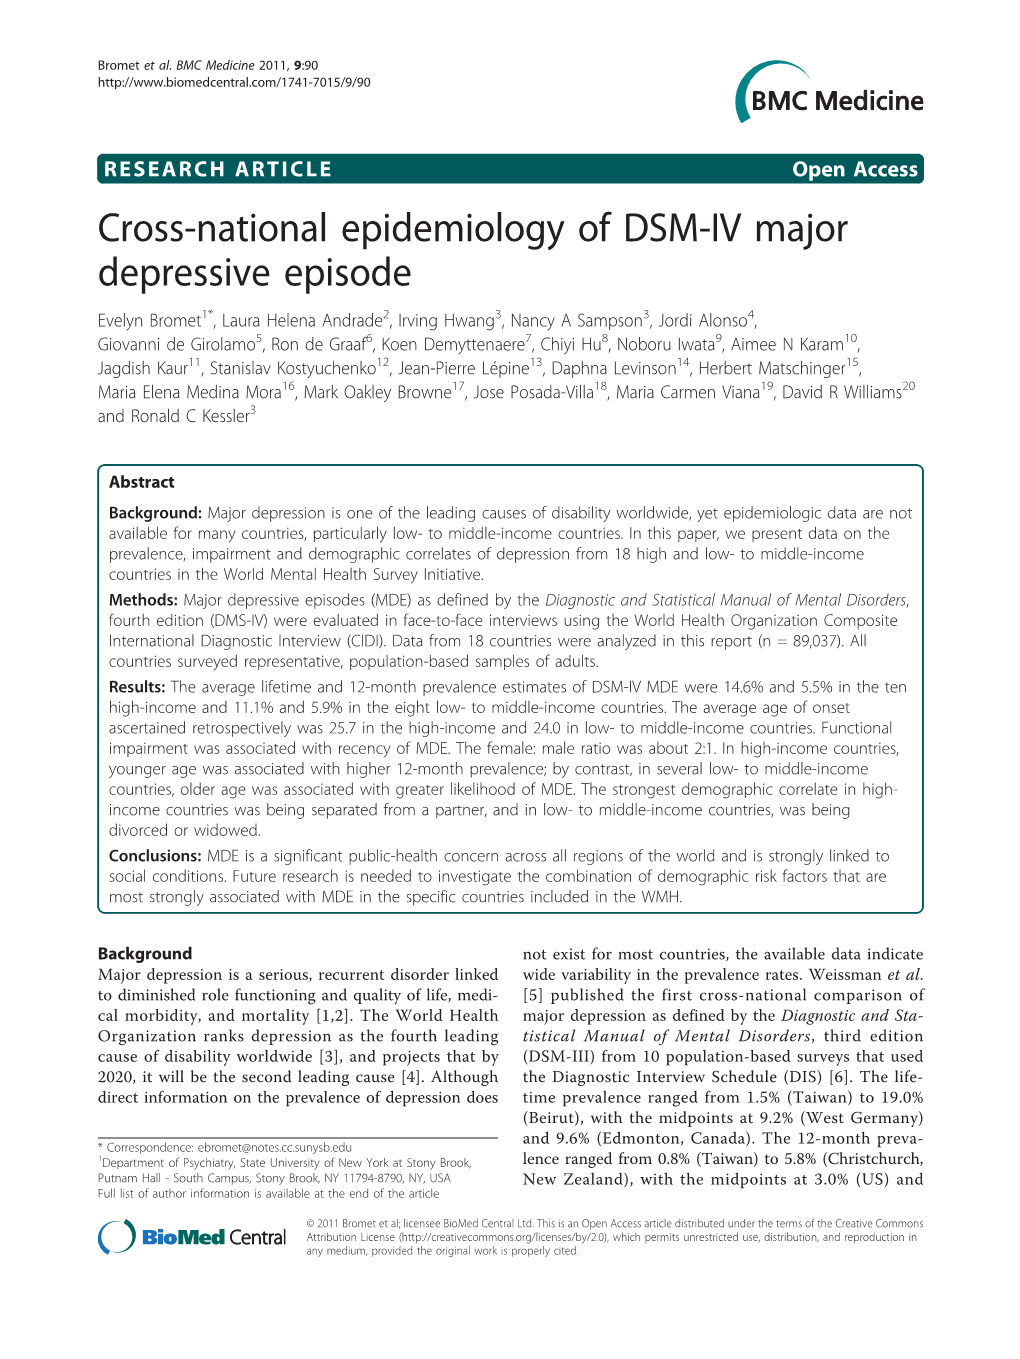 Cross-National Epidemiology of DSM-IV Major Depressive Episode